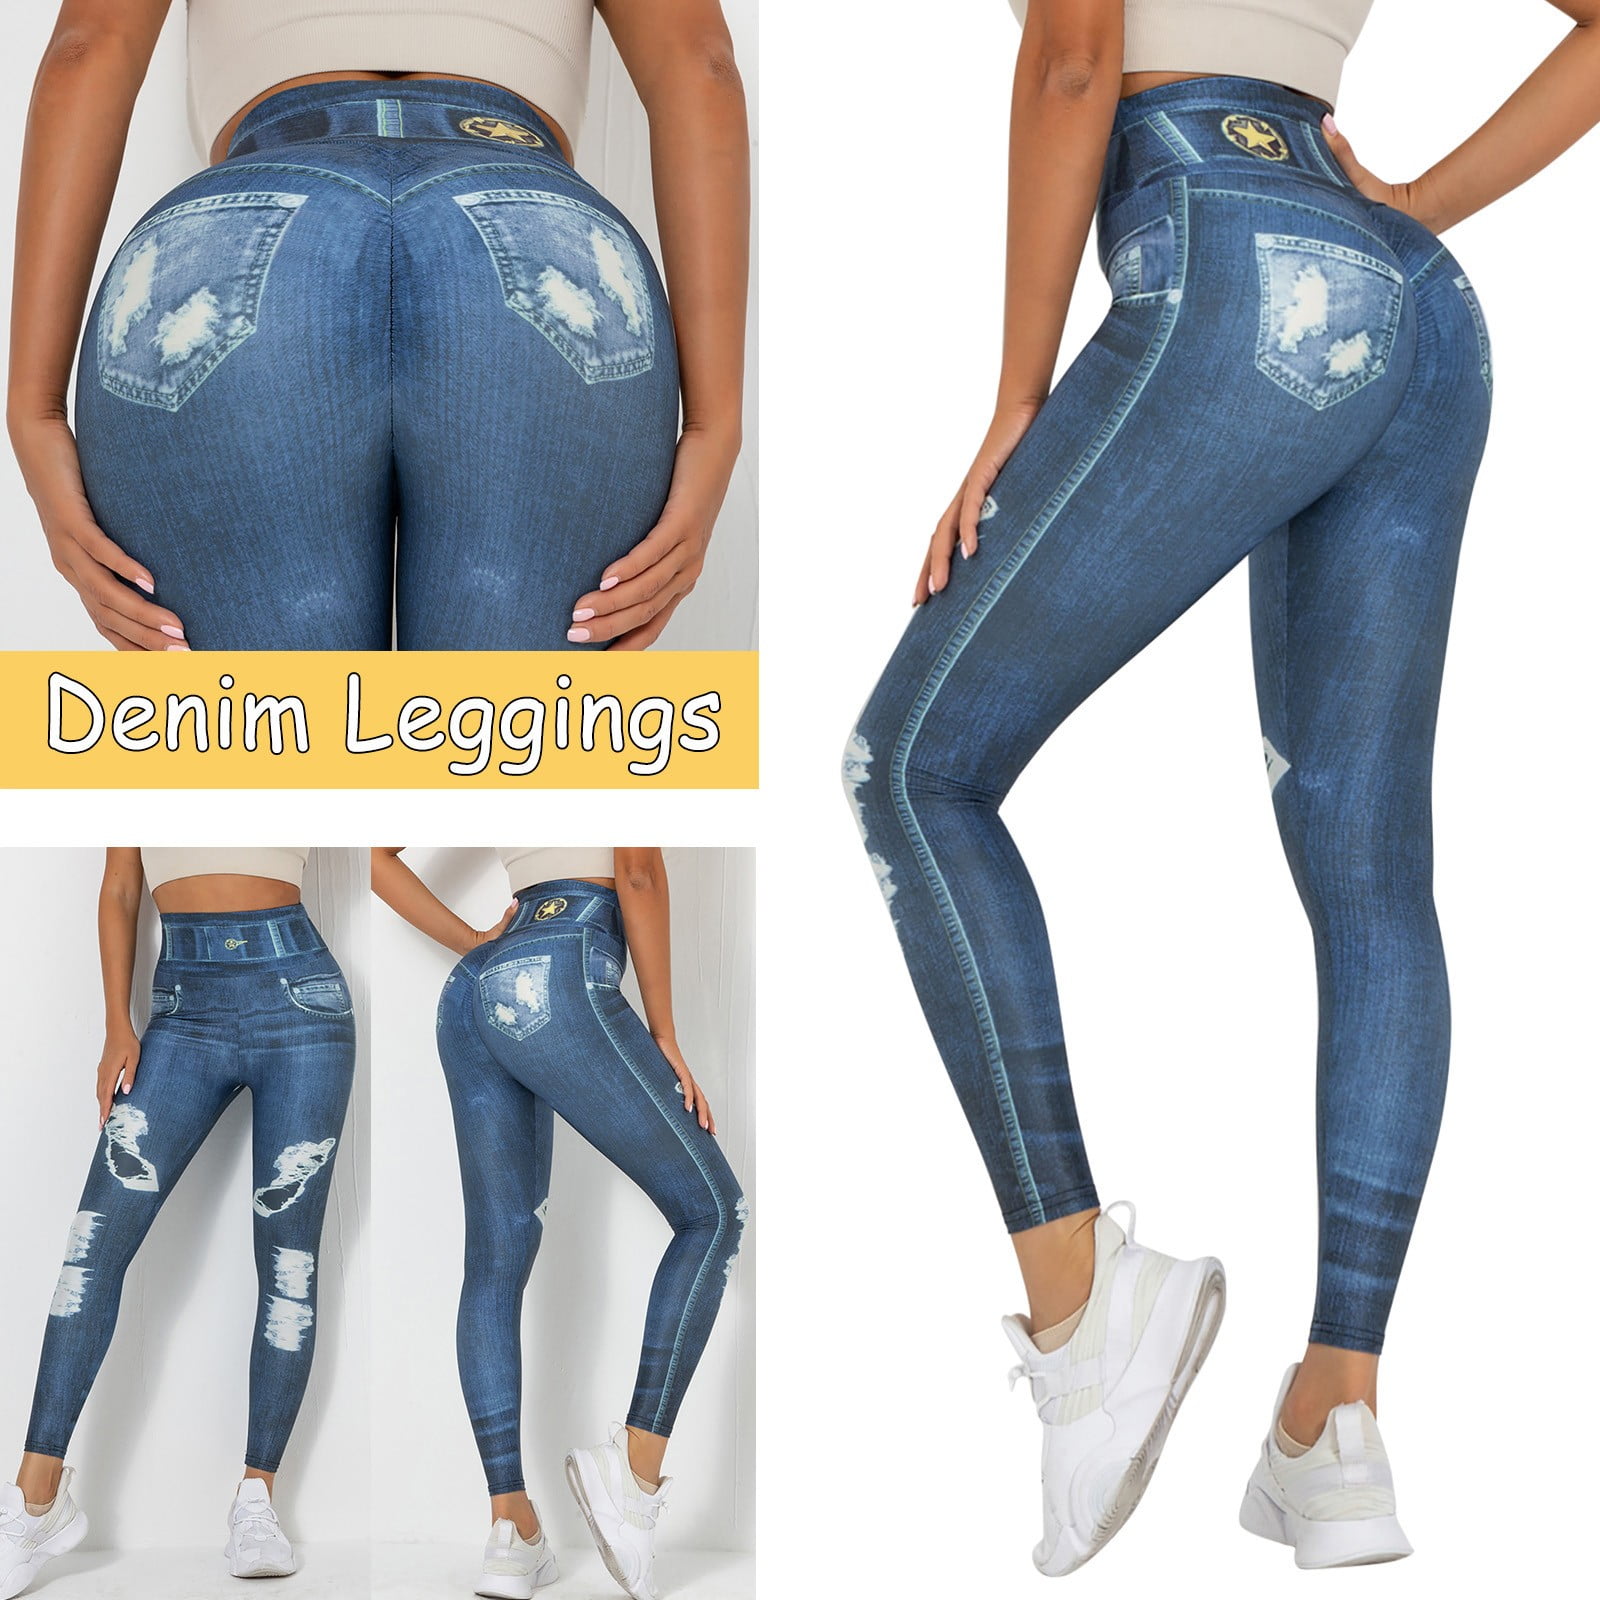 NKOOGH Jeggings for Women 80S Outfit Women'S Denim Print Jeans Look Like  Leggings Stretchy High Waist Slim Jeggings 